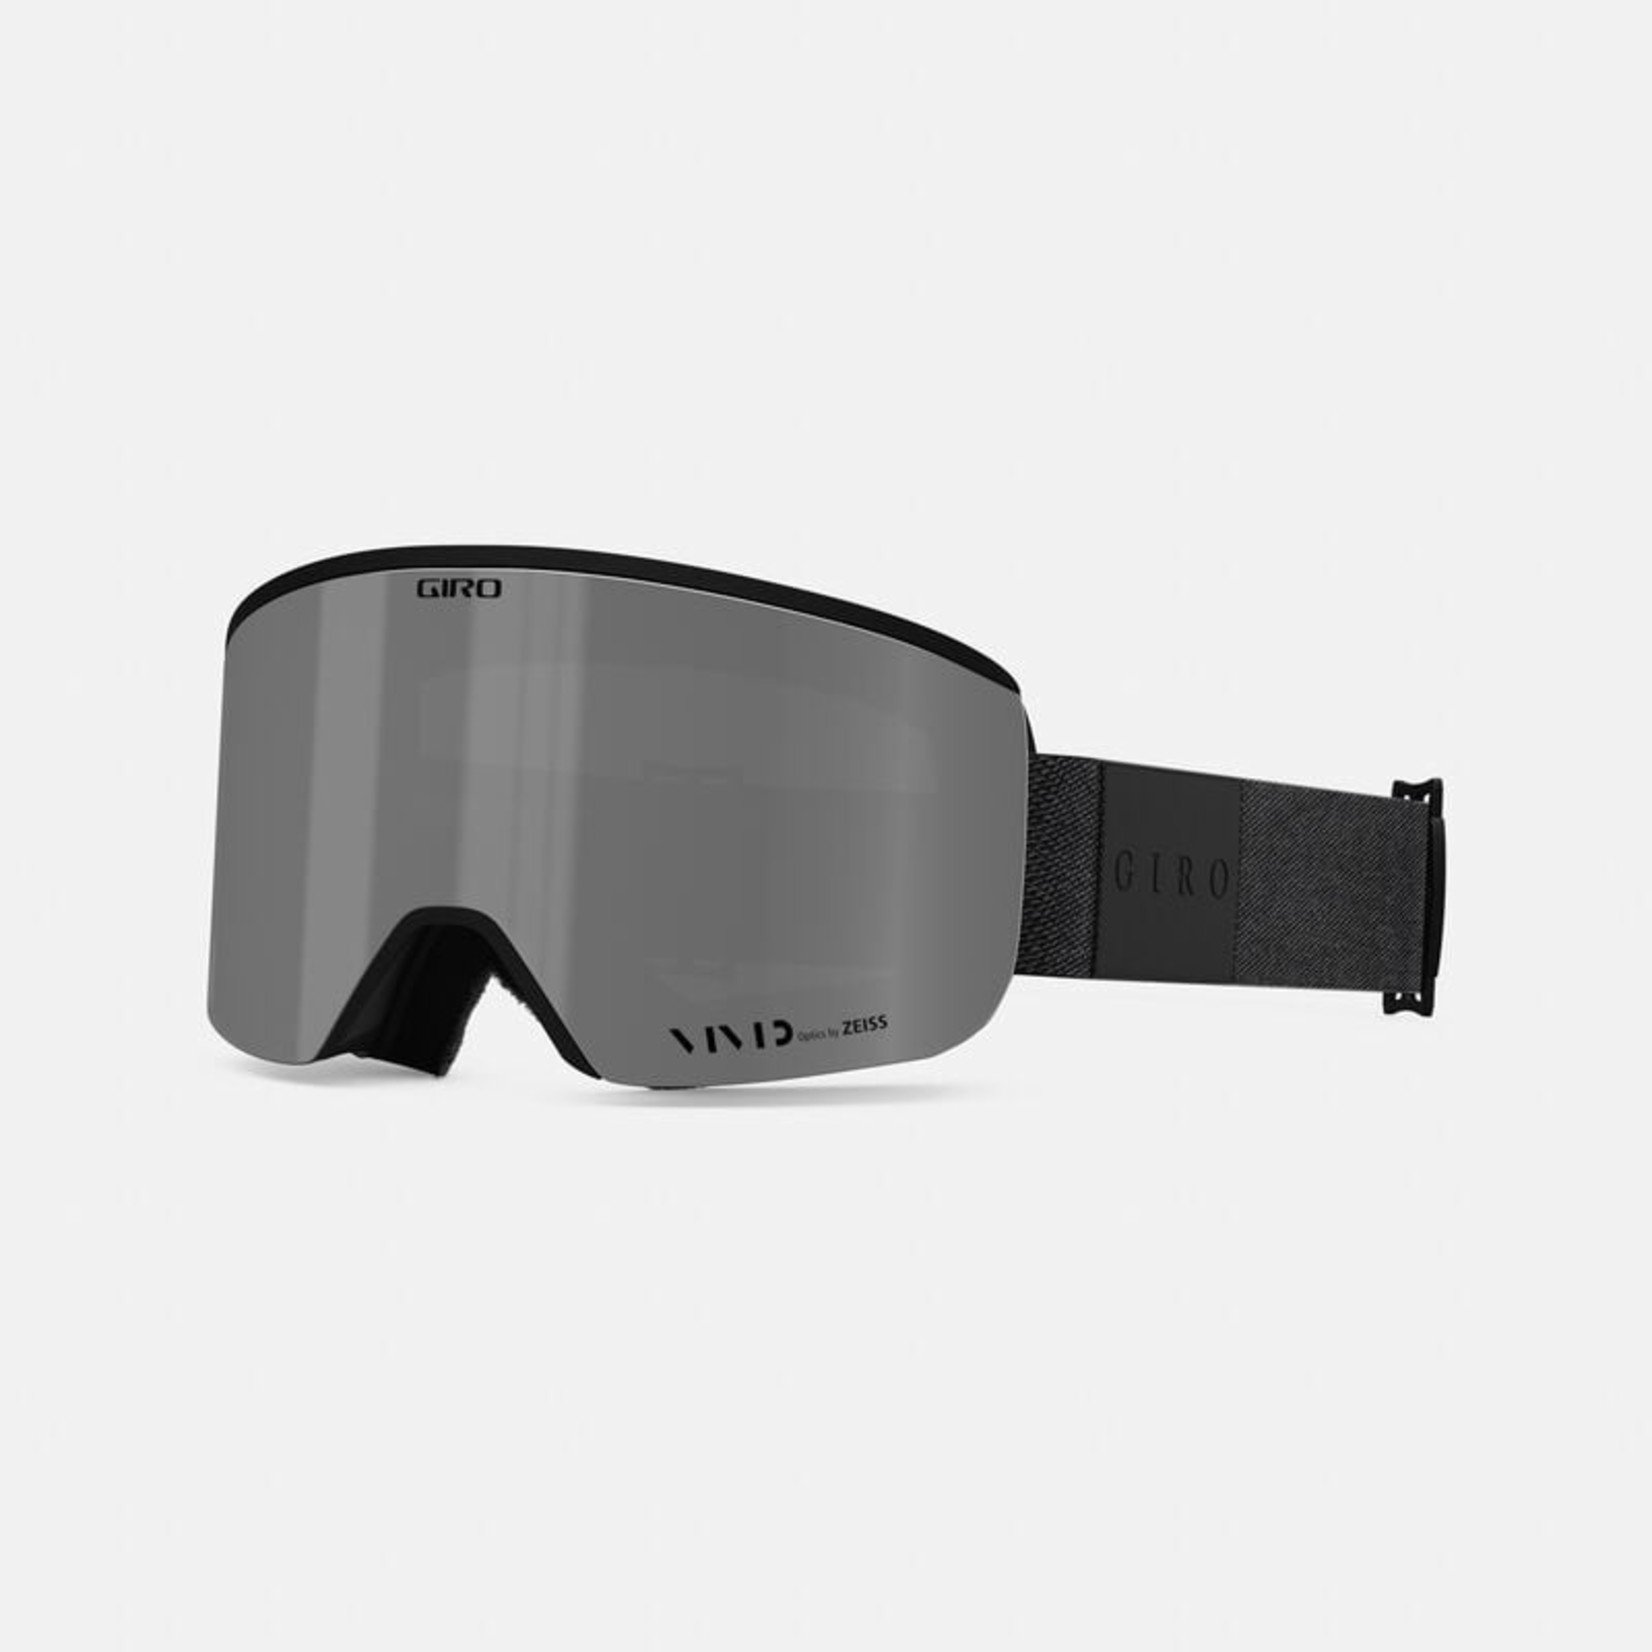 Giro NEW Giro Axis Adult Snowboard Goggles Unisex Medium